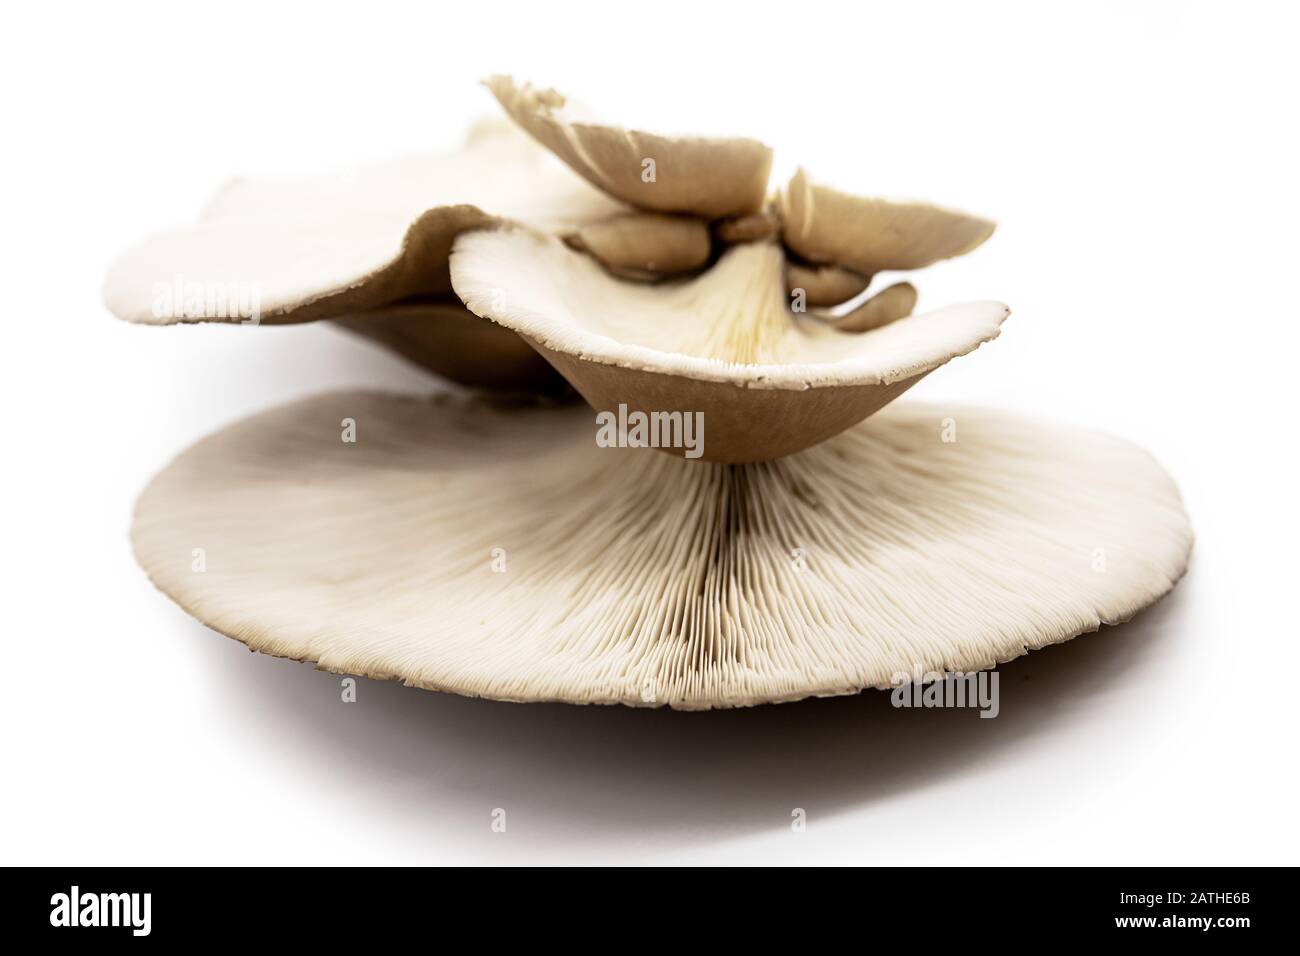 Big oyster mushroom isolated on white background, Pleurotus ostreatus Stock Photo